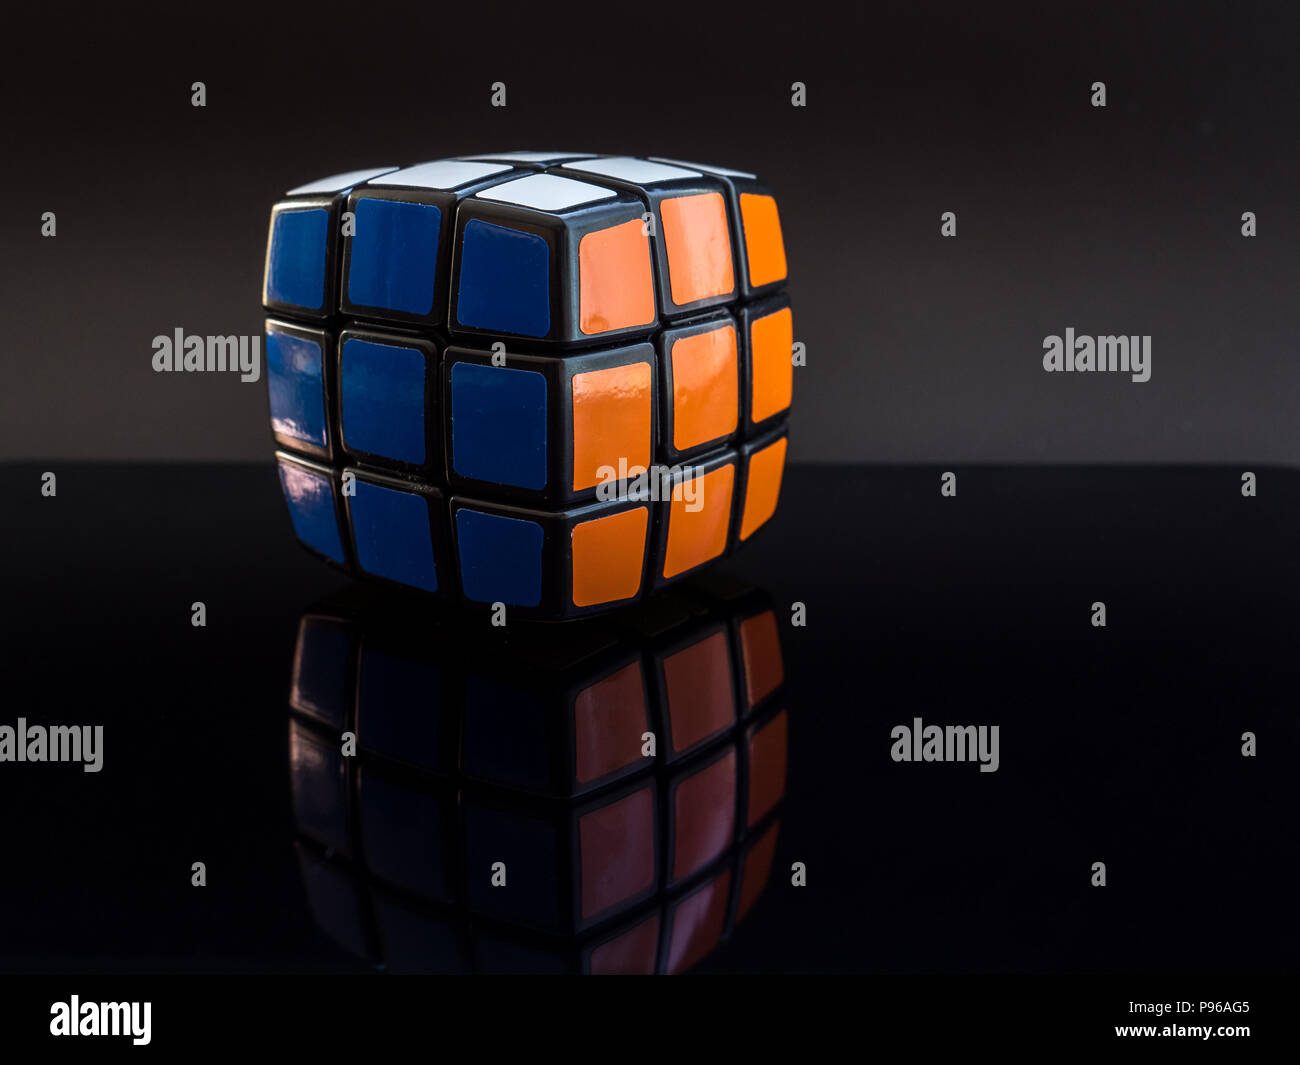 round rubik's cube on black background with reflection studio light Stock Photo